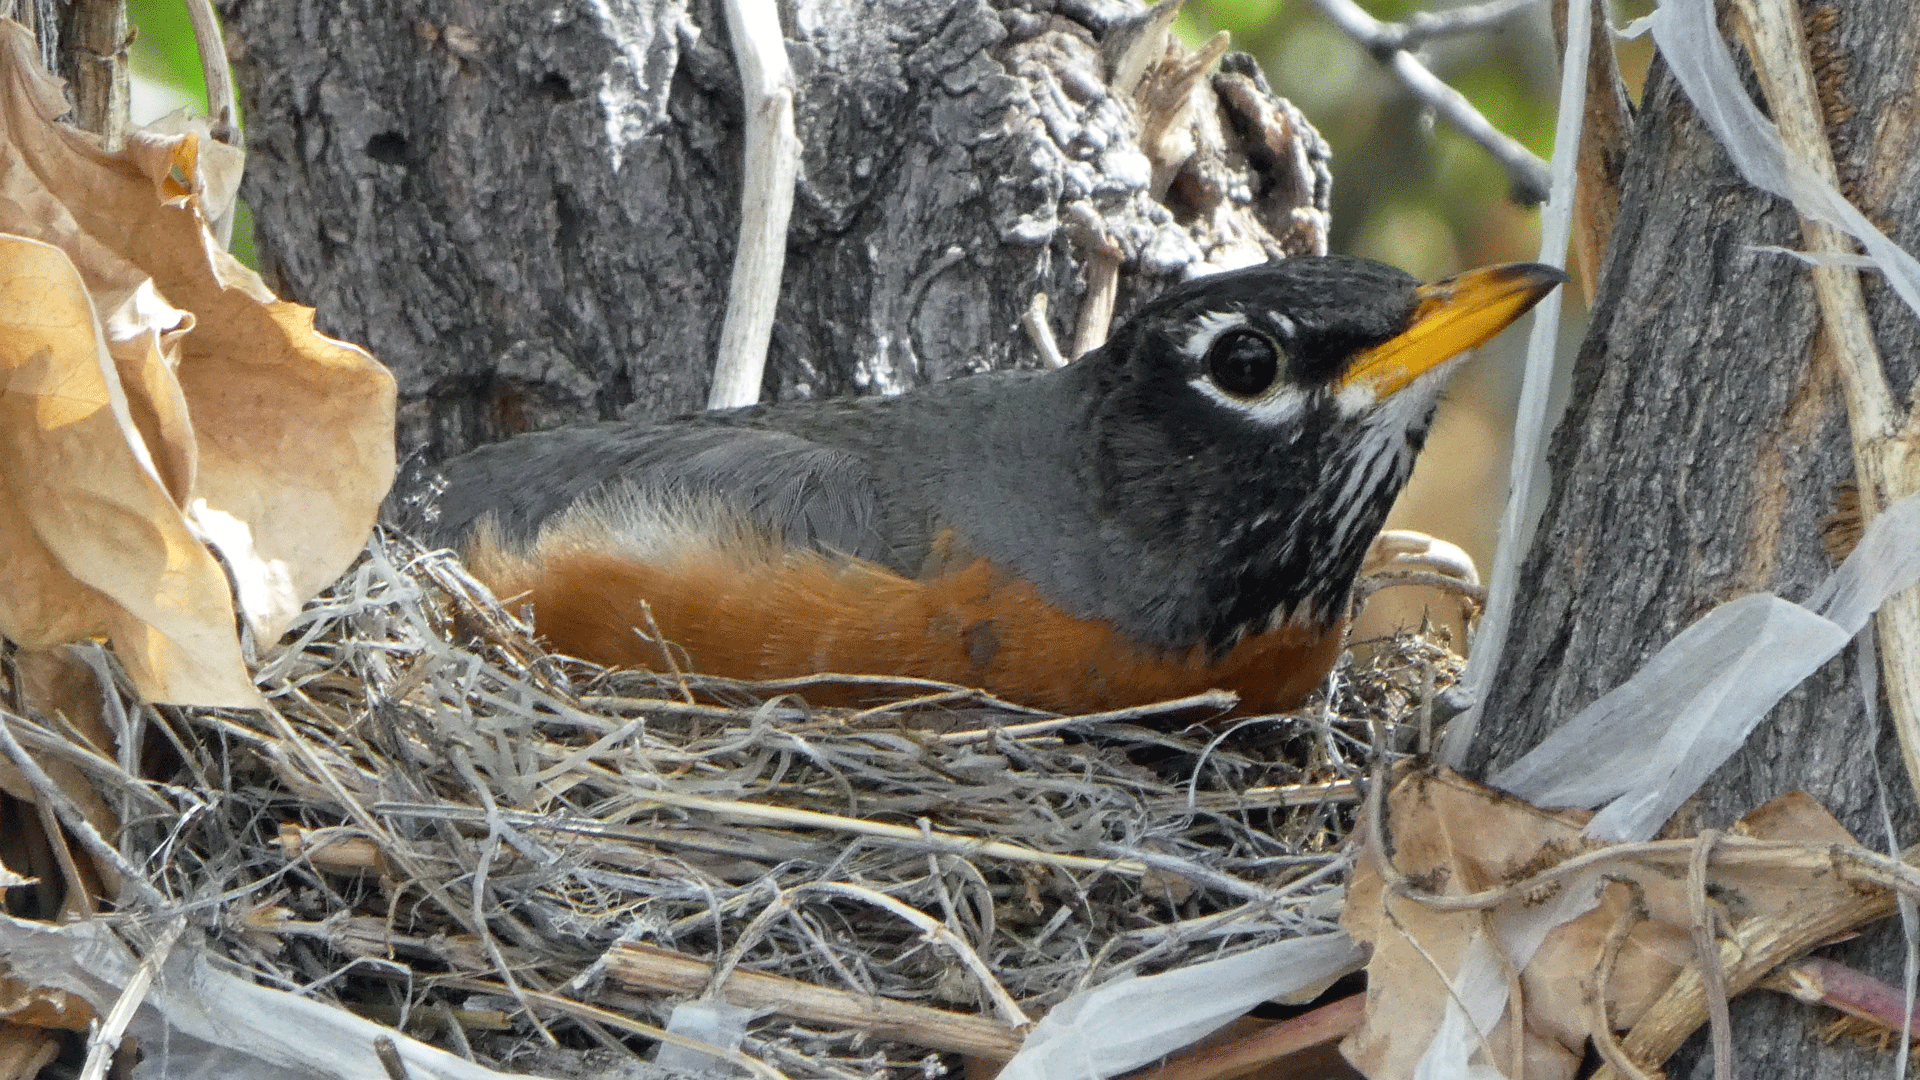 Nesting, Albuquerque, April 2020